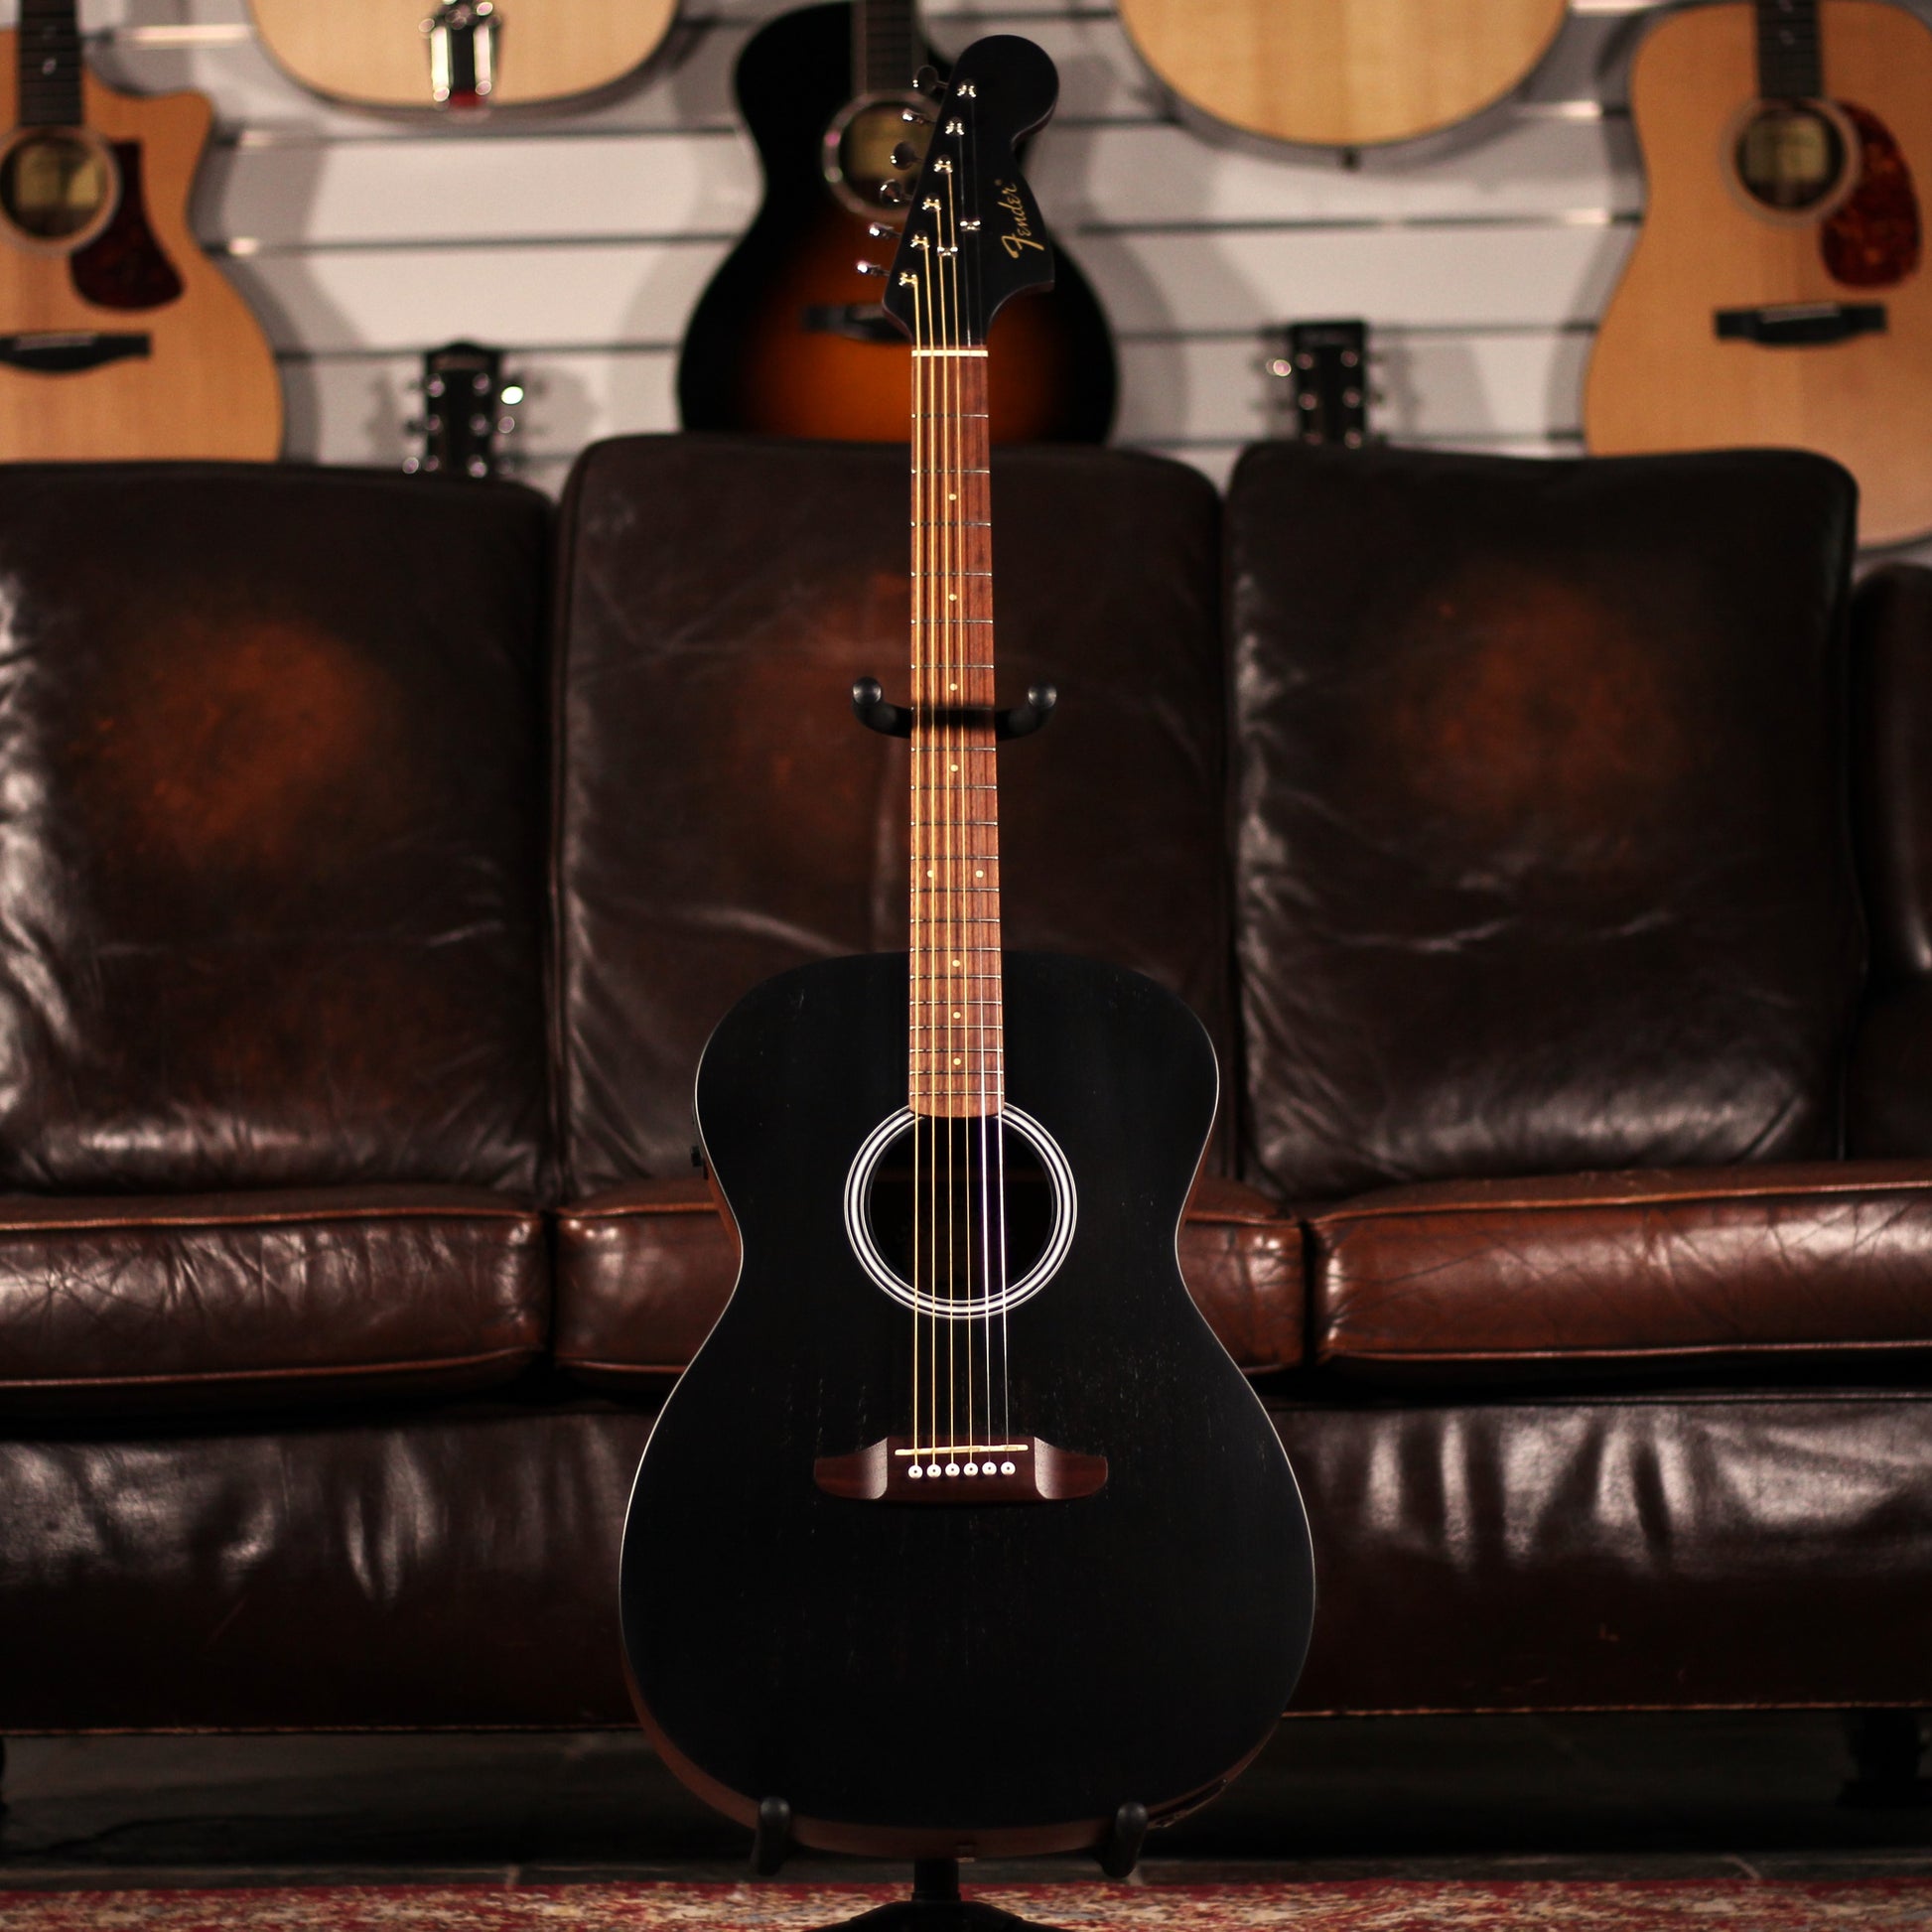 Fender Monterey Standard - Black